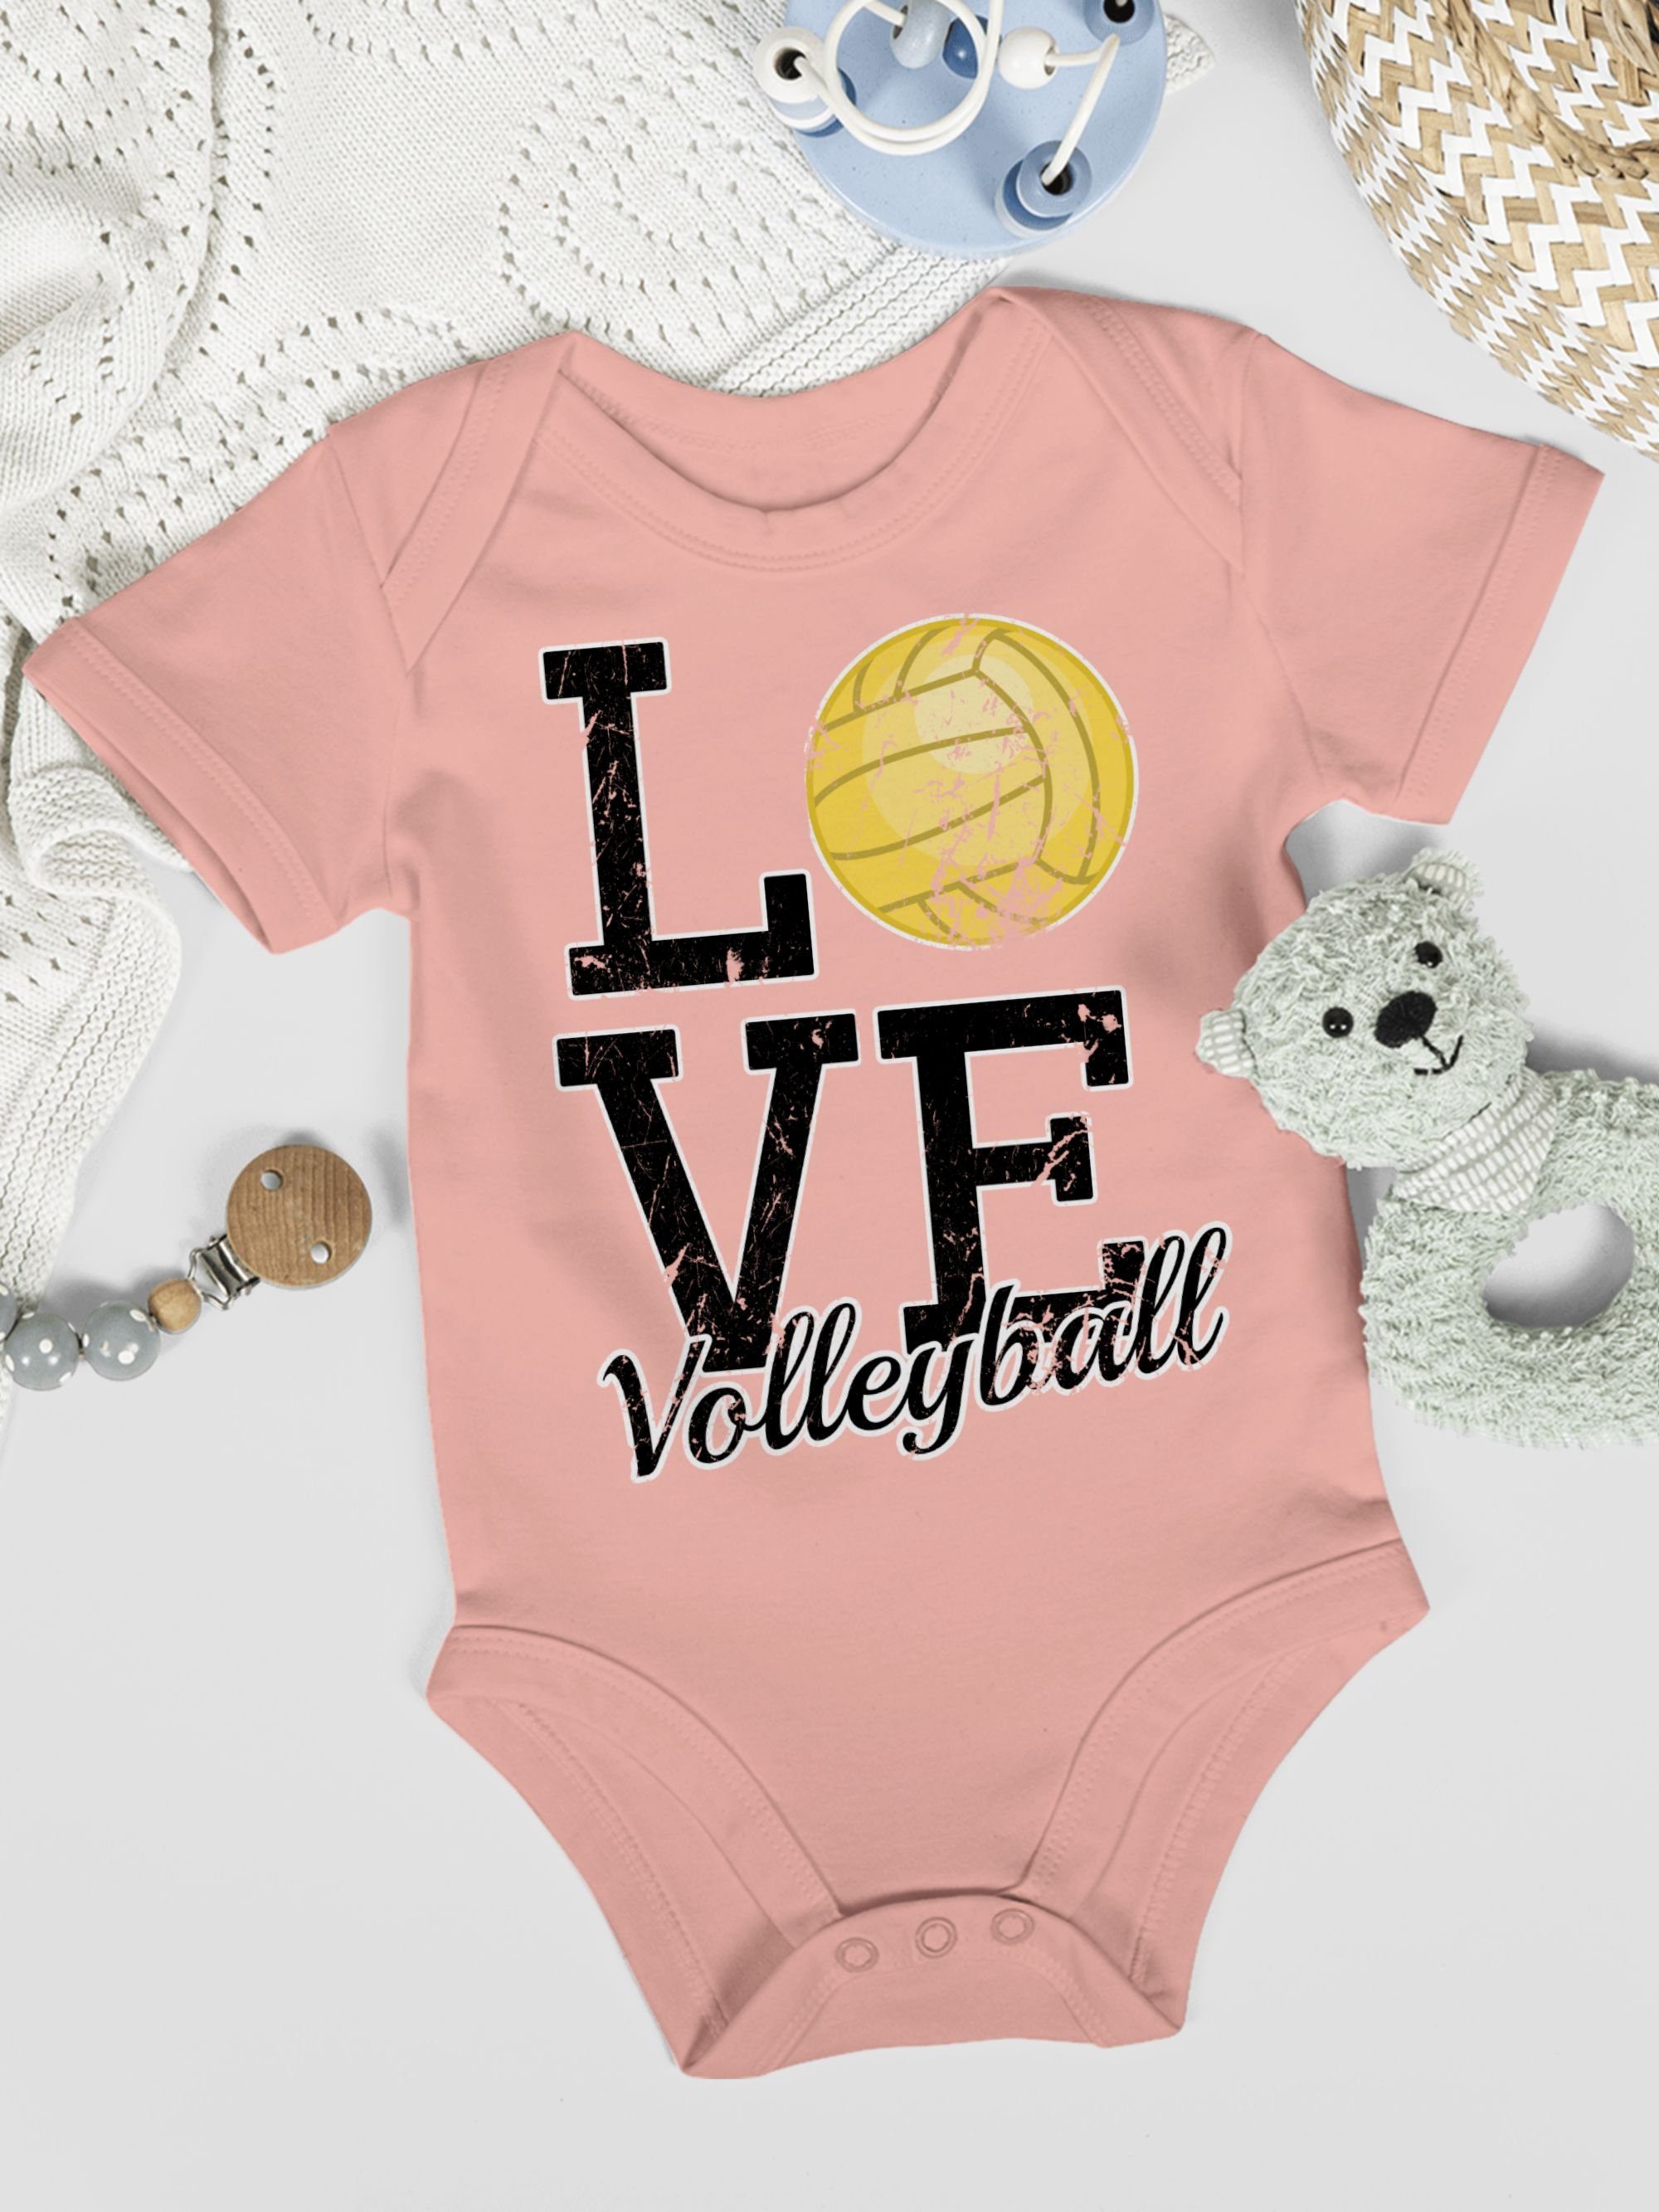 Love Shirtracer Sport Shirtbody & Baby 2 Gold Volleyball Bewegung Babyrosa